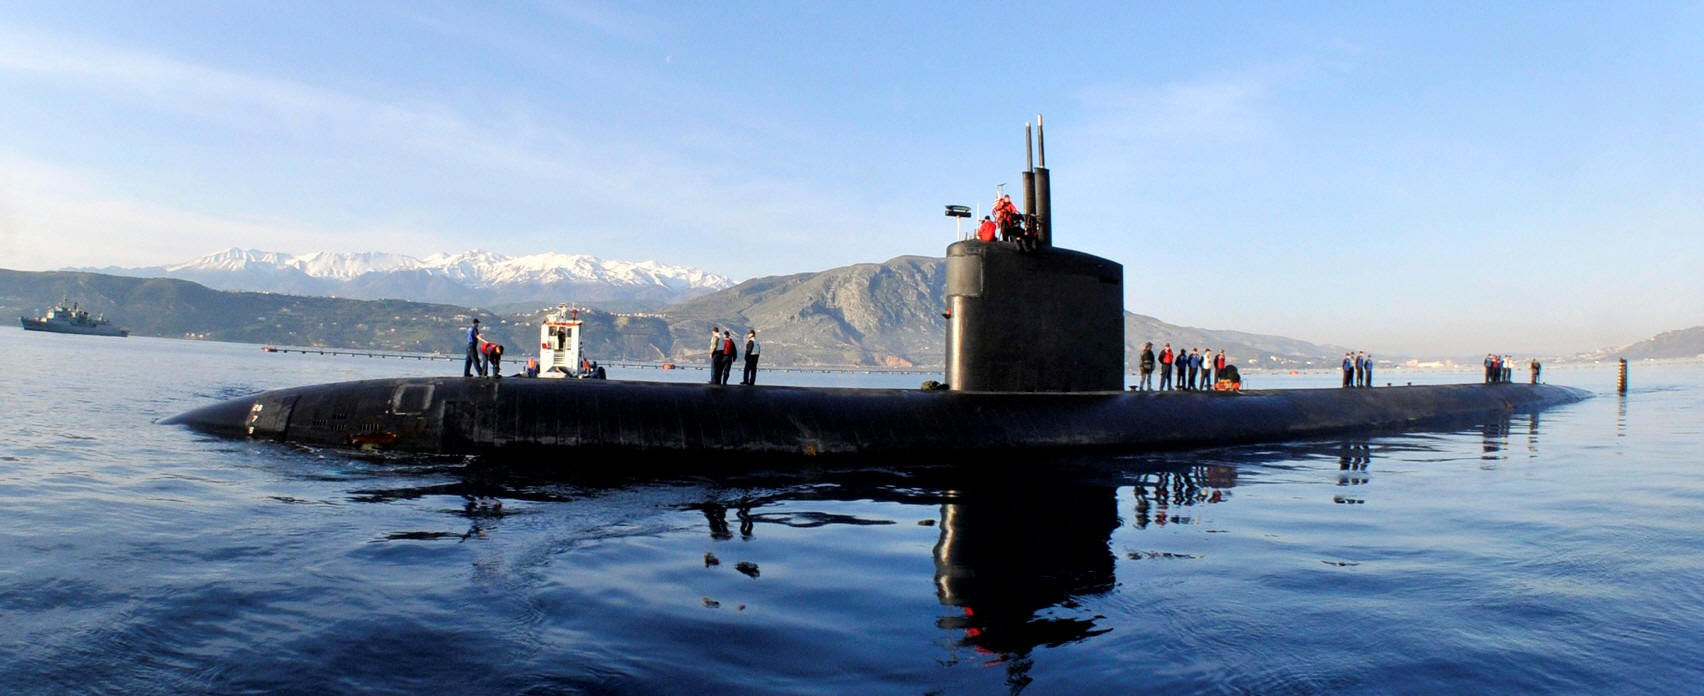 ssn-756 uss scranton los angeles class submarine